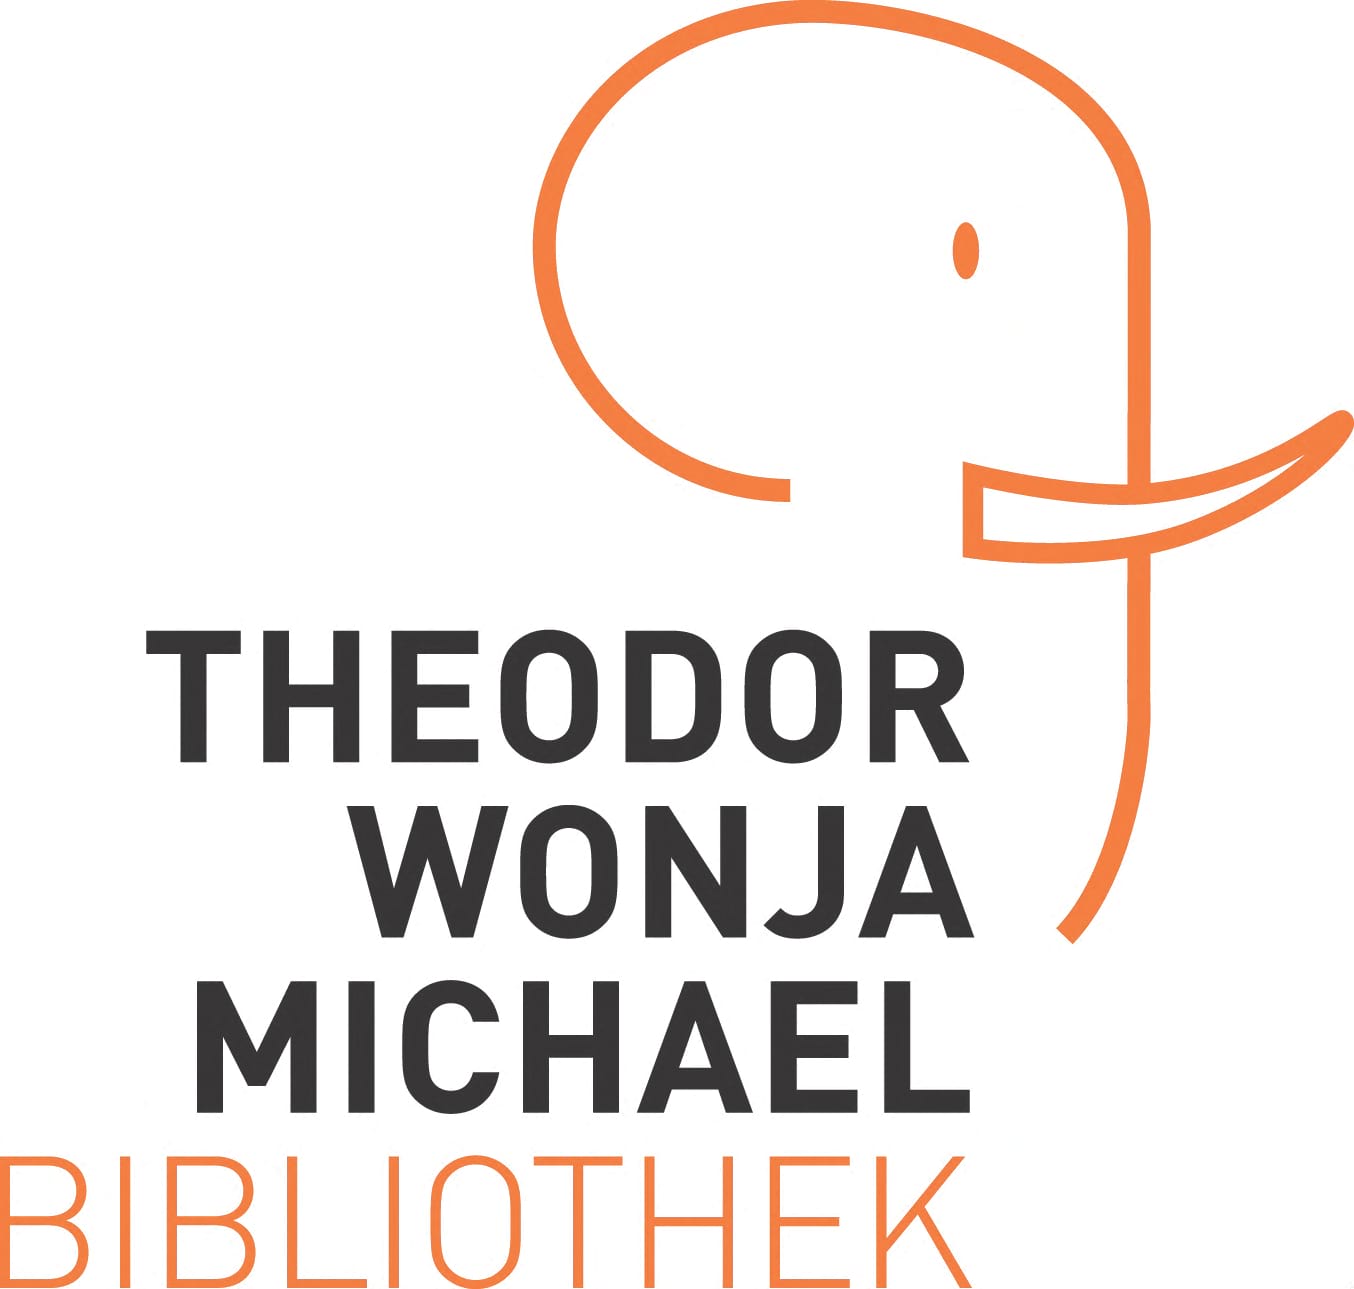 Theodor Wonja Michael Bibliothek